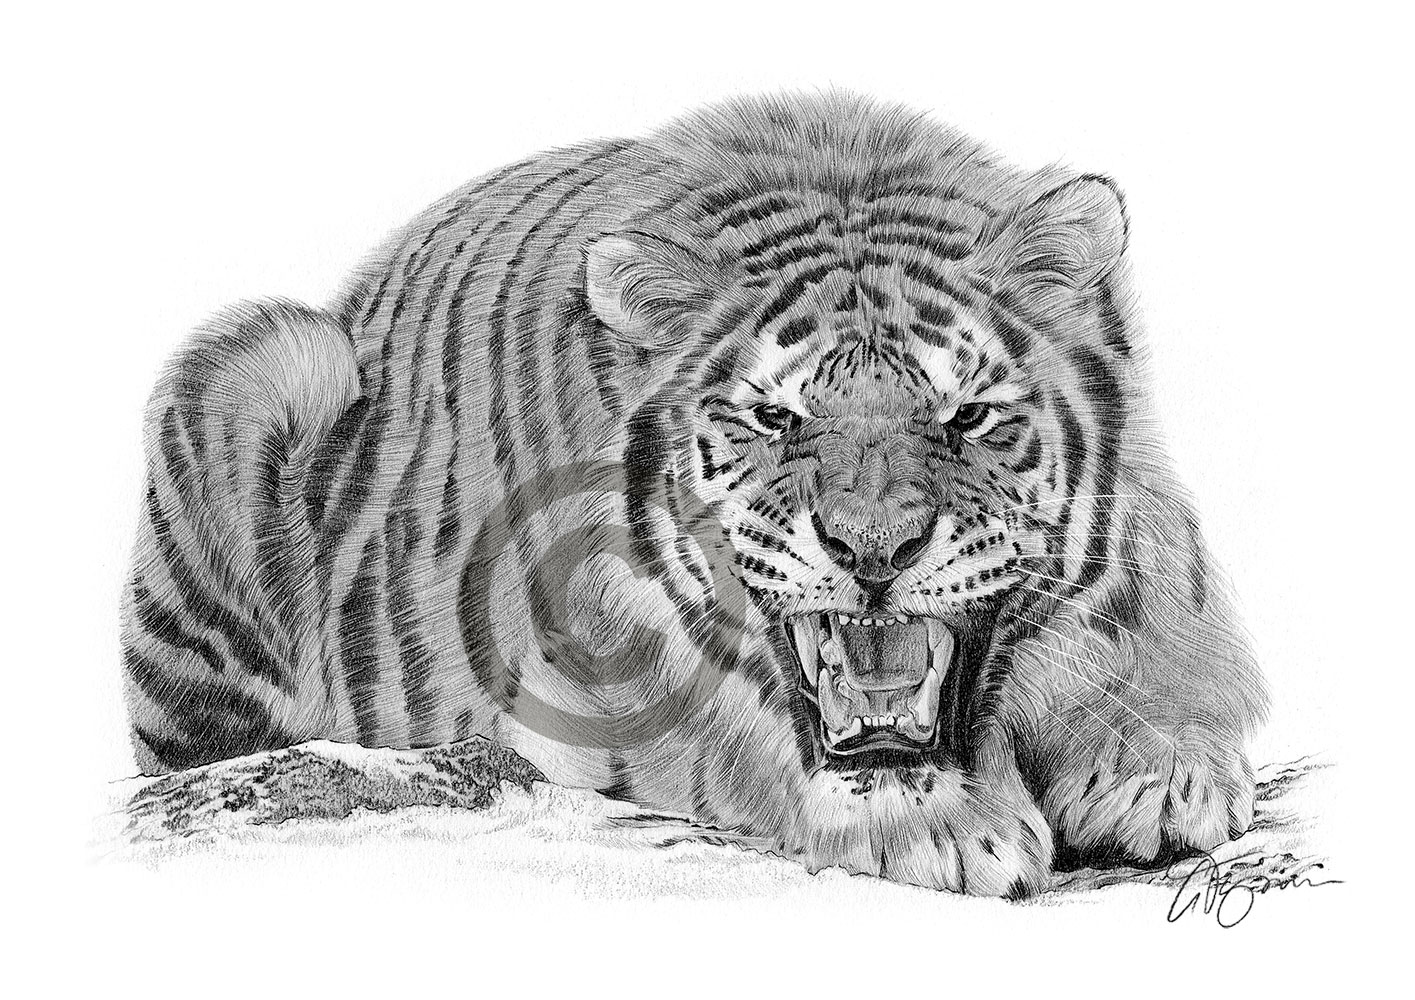 Pencil drawing of an adult Sumatran tiger by artist Gary Tymon